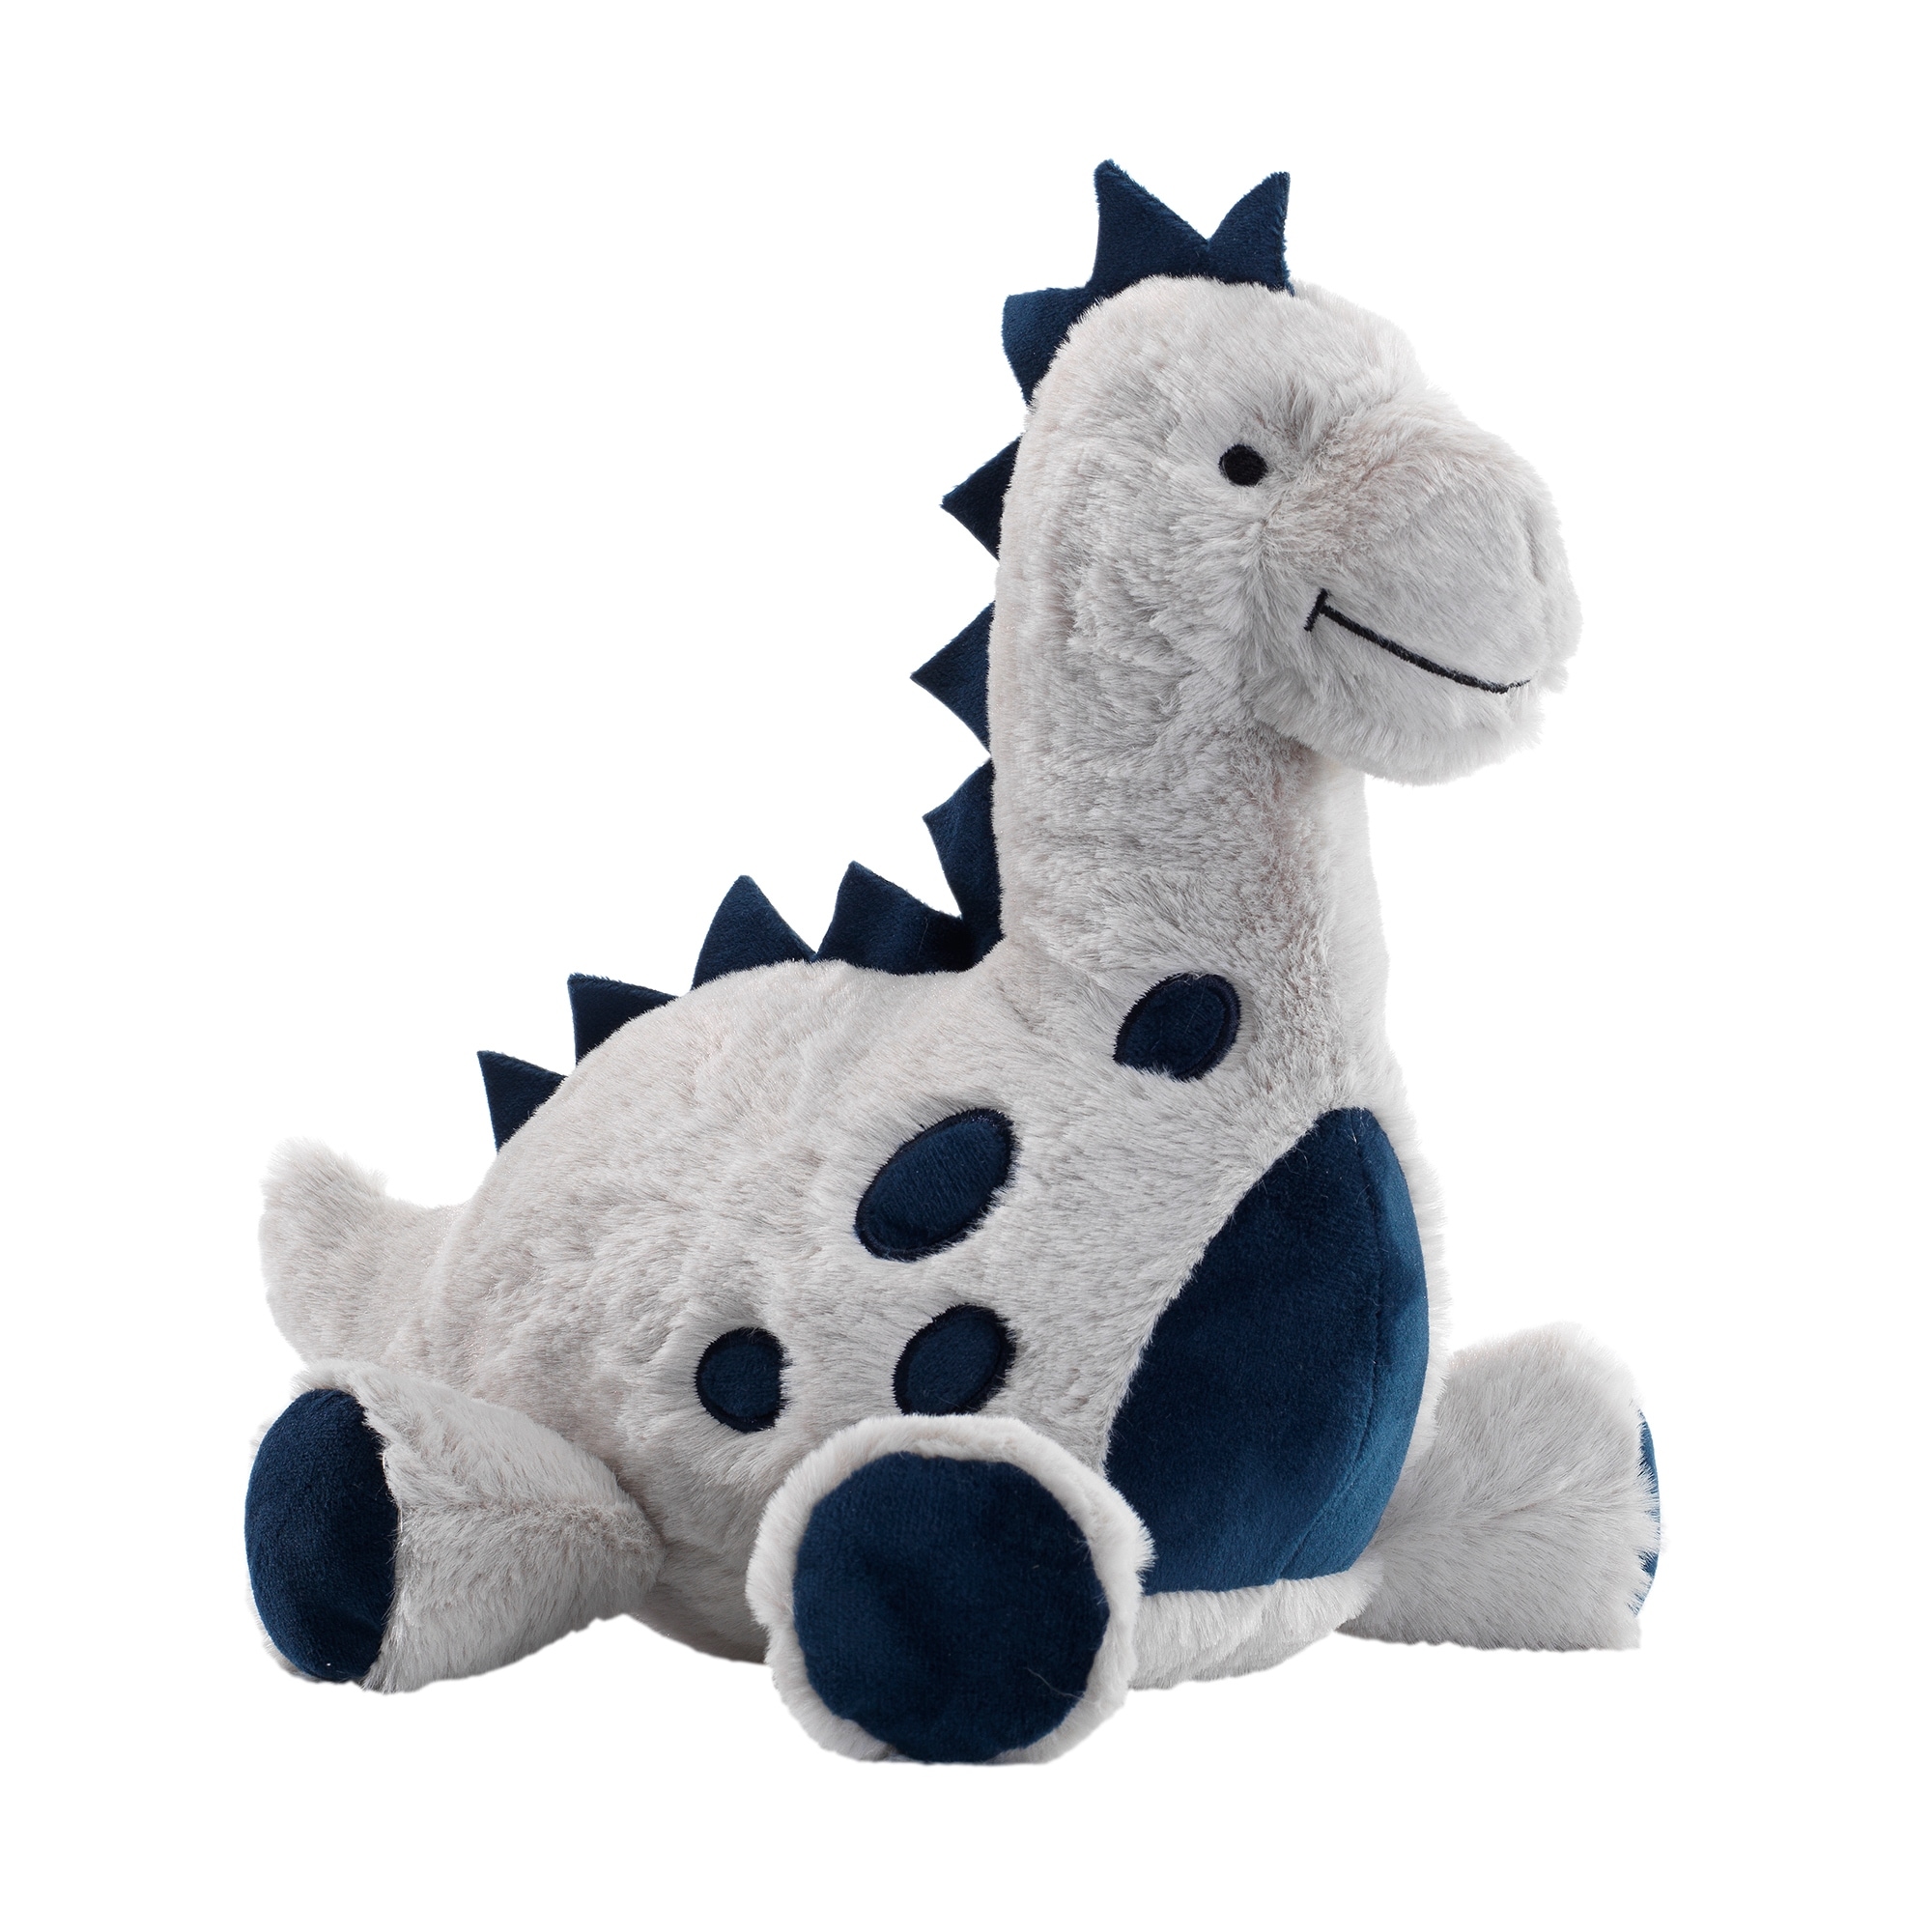 dinosaur plush stuffed animals